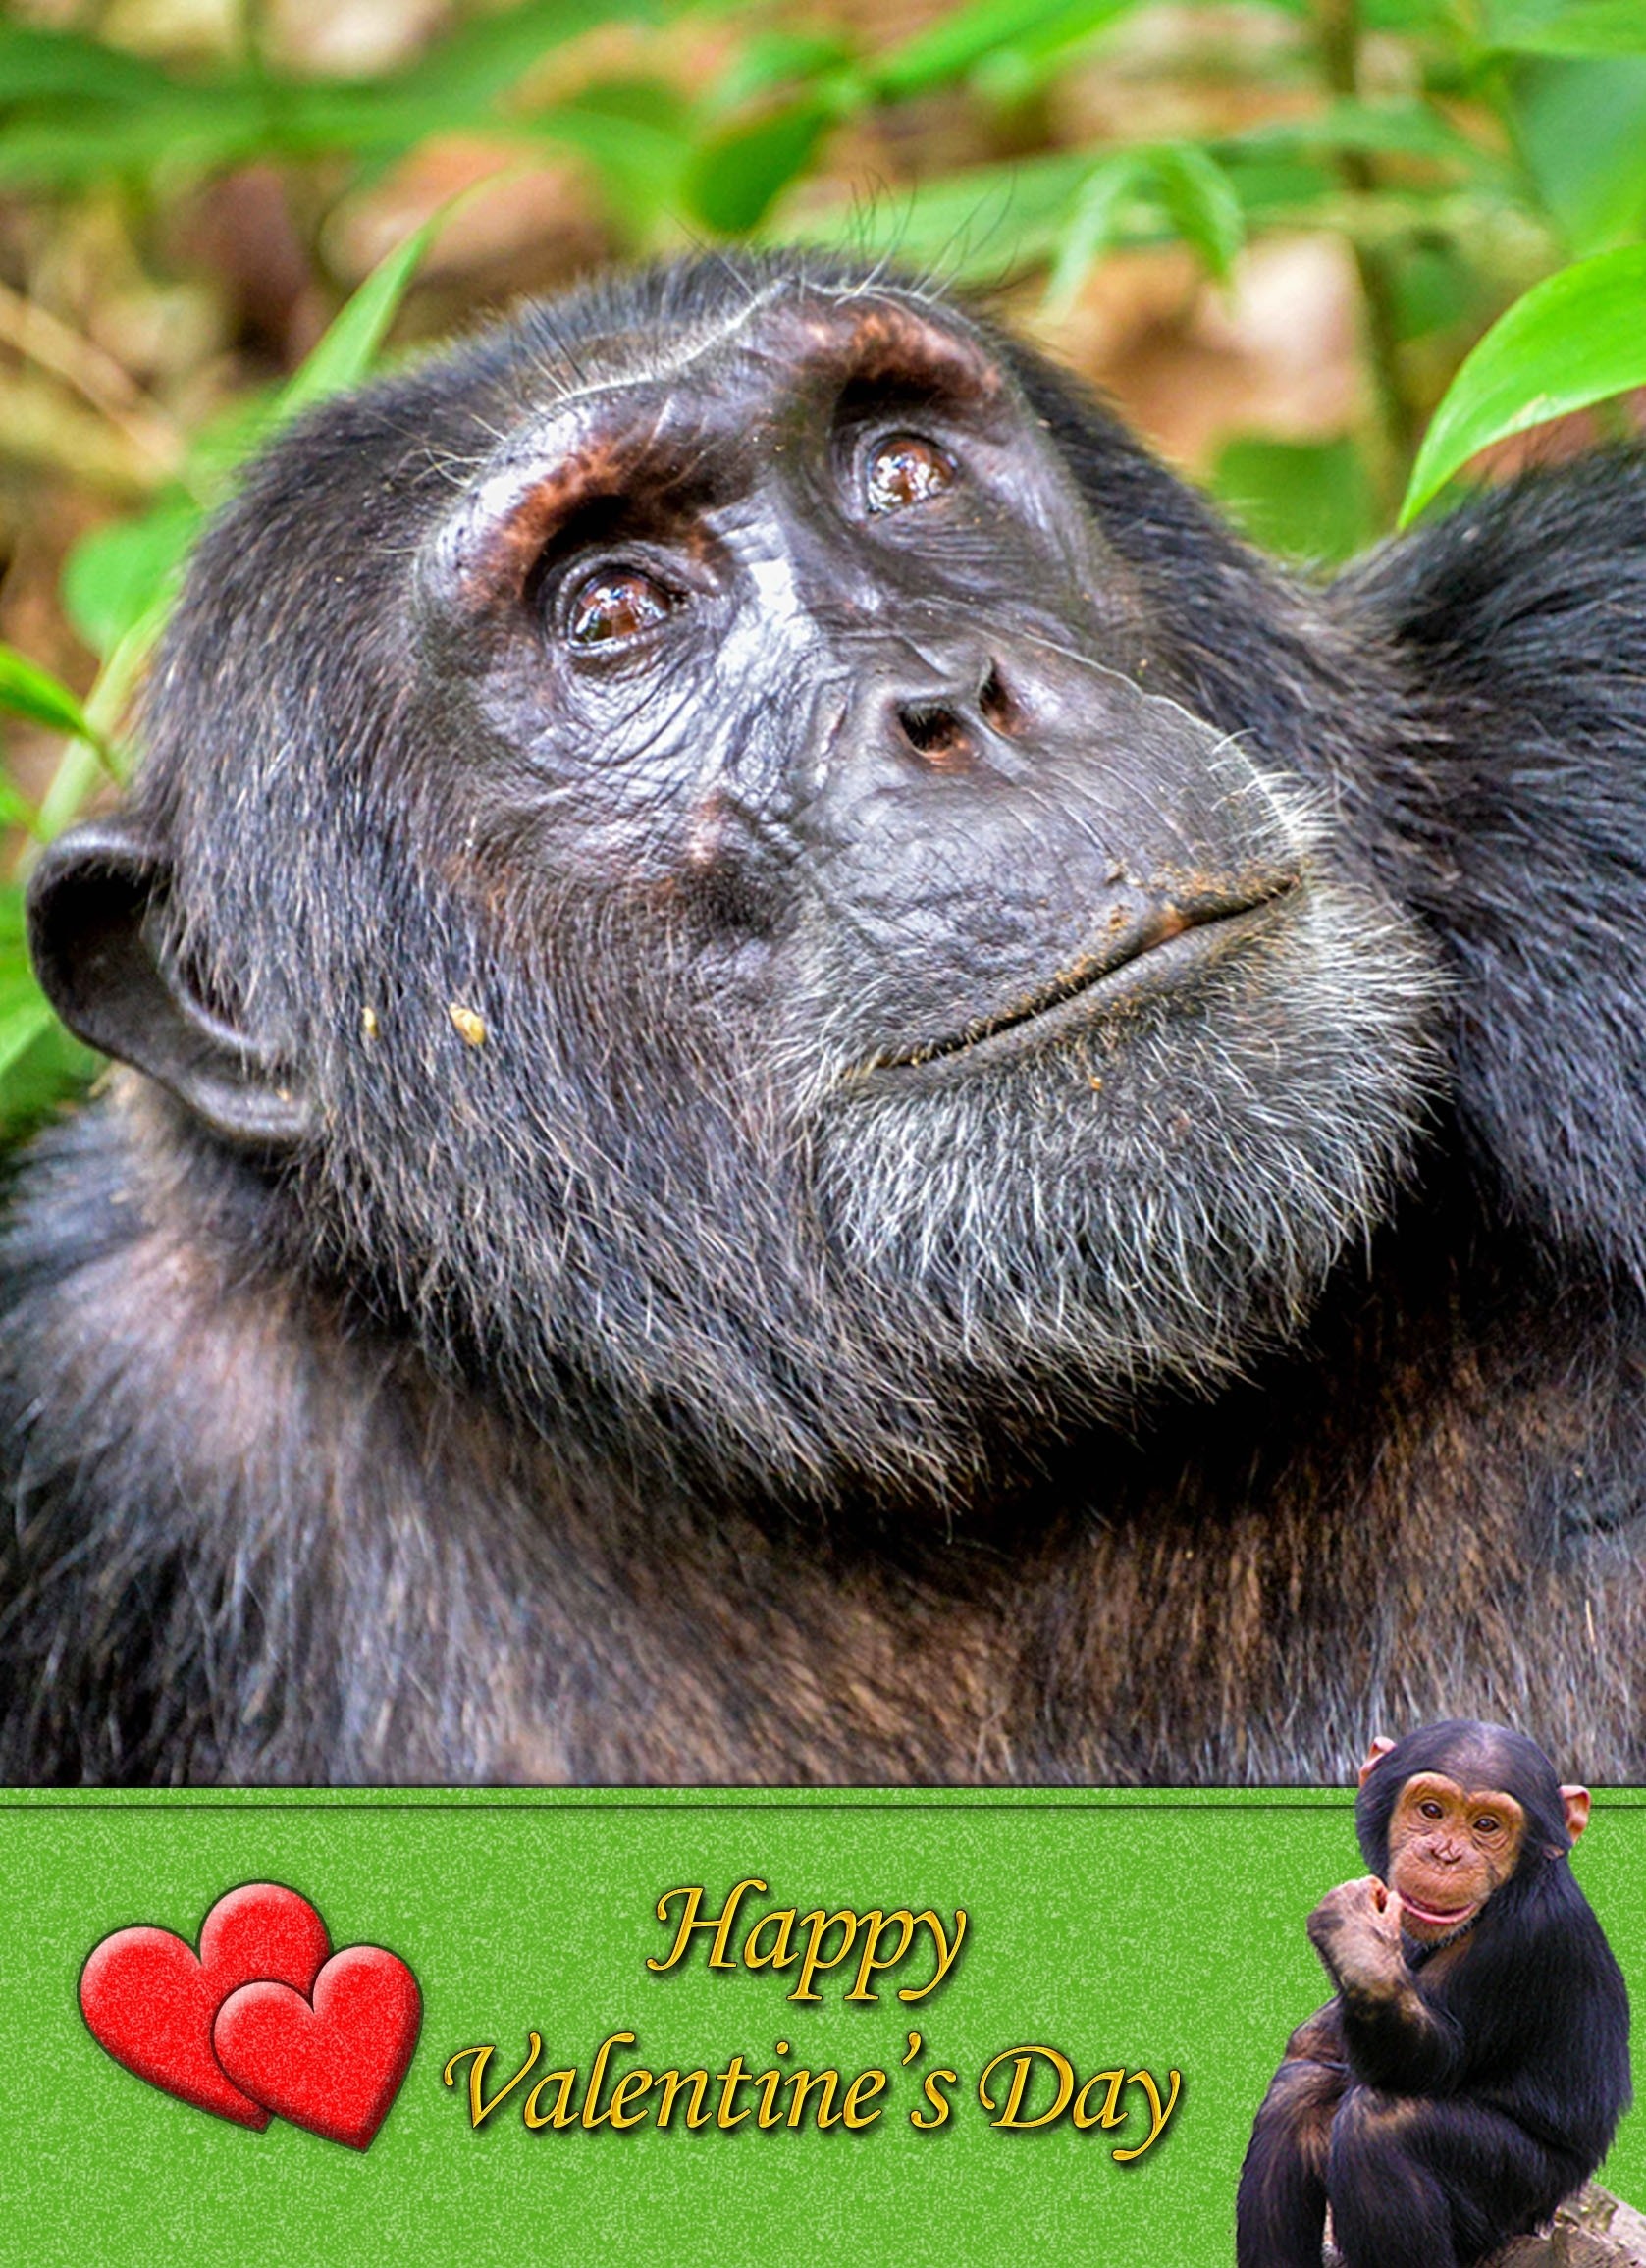 Chimpanzee Valentine's Day Card